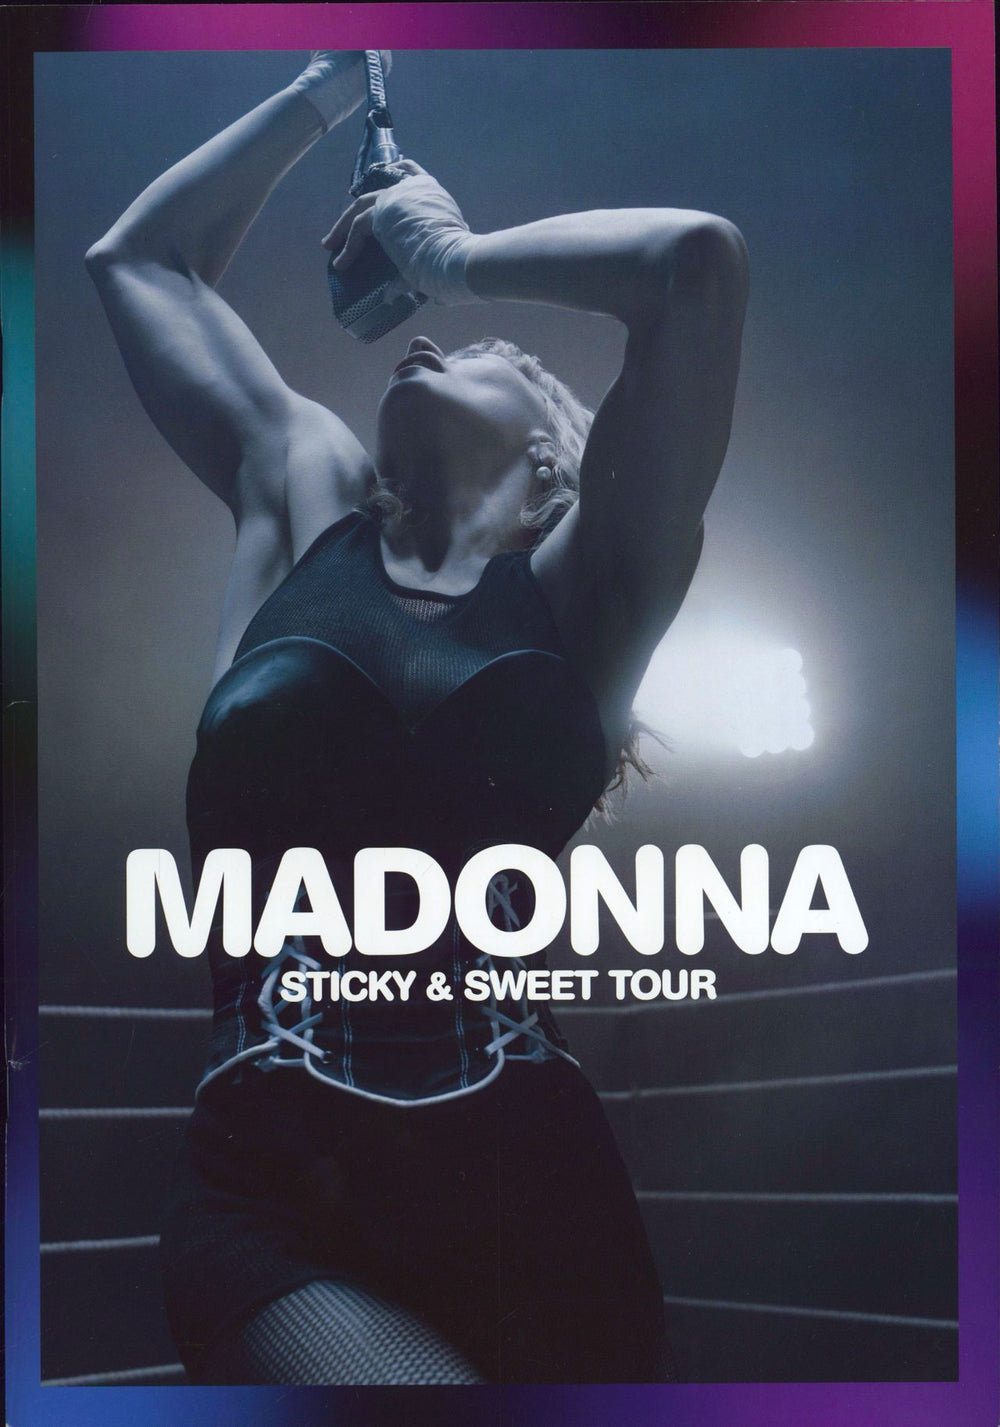 Madonna Sticky & Sweet Tour - 1st leg + Carrier bag & Souvenir Ticket stub UK tour programme TOUR PROGRAMME, BAG & TICKET